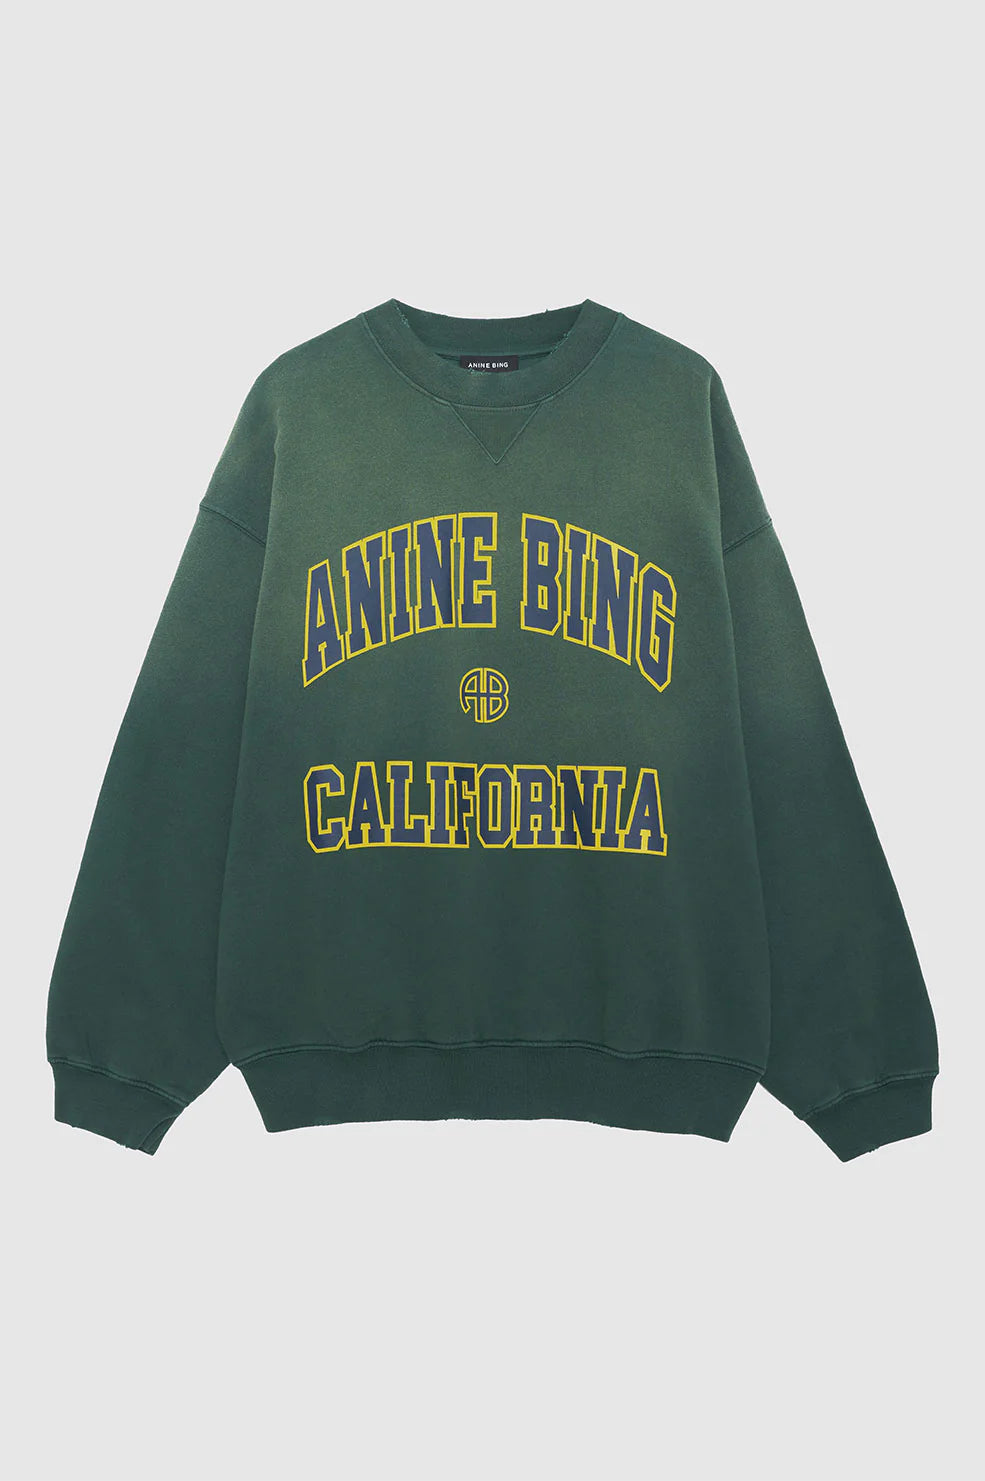 The Jaci Sweatshirt Anine Bing California in Washed Faded Green